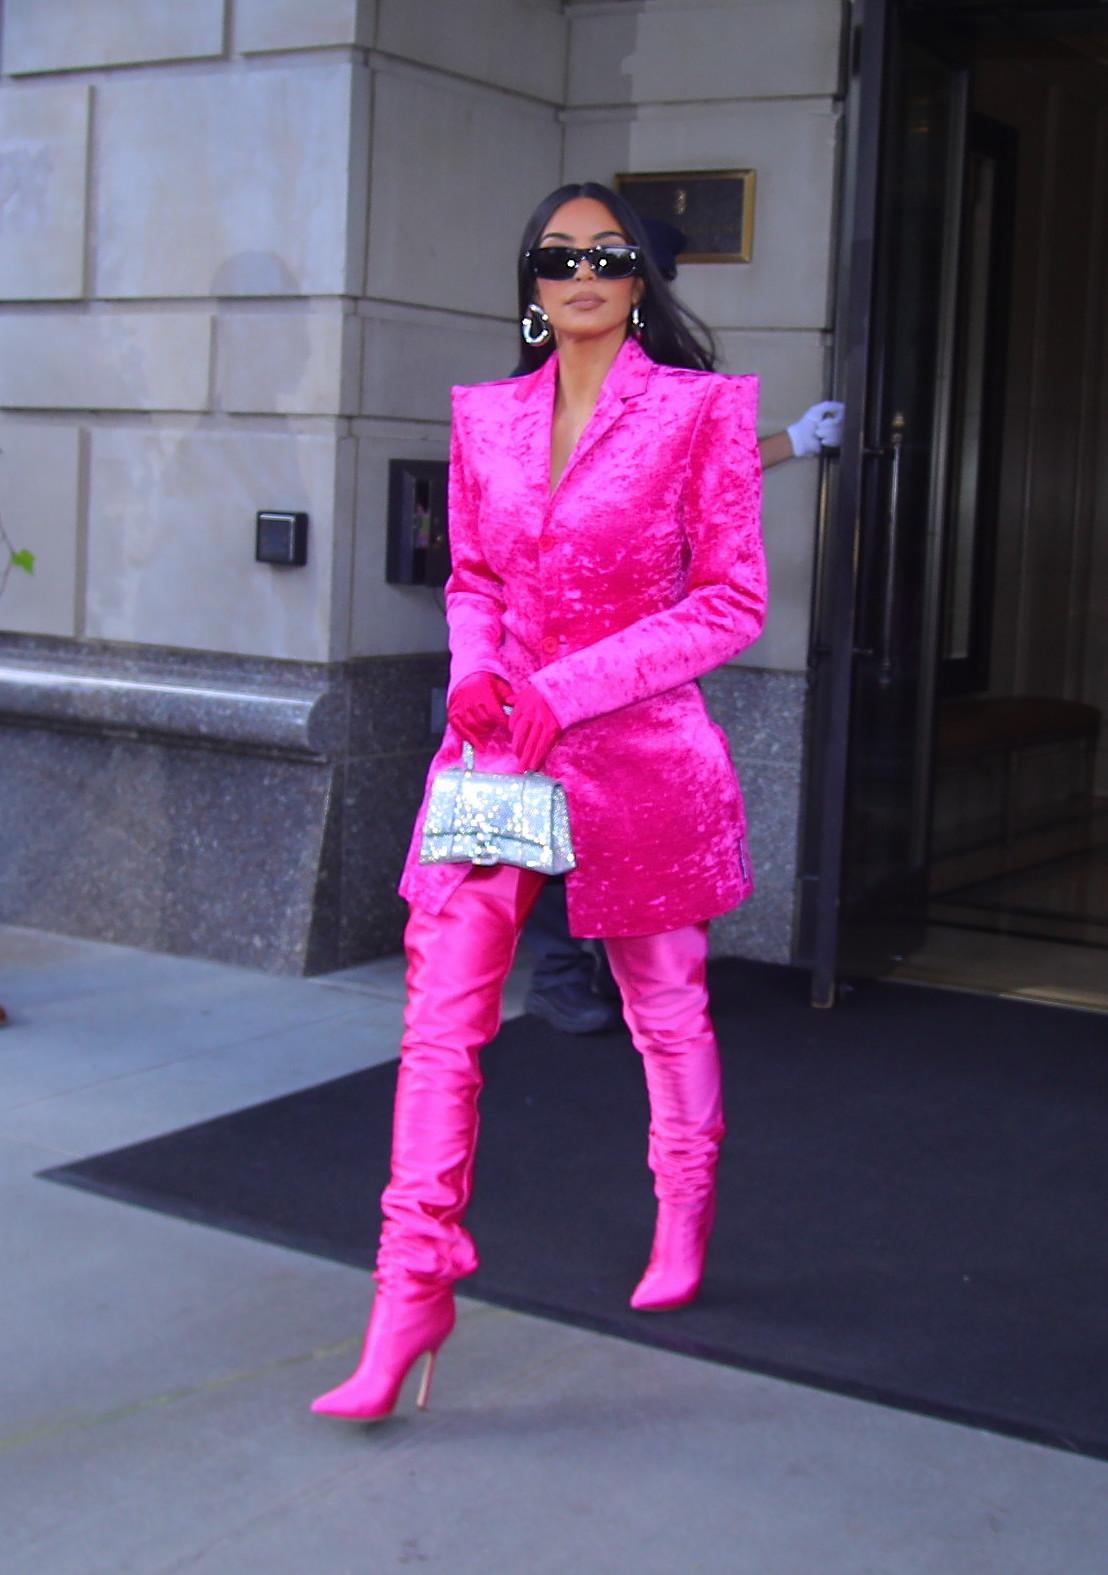 Kim Kardashian heads to SNL rehearsal in a pink Balenciaga outfit